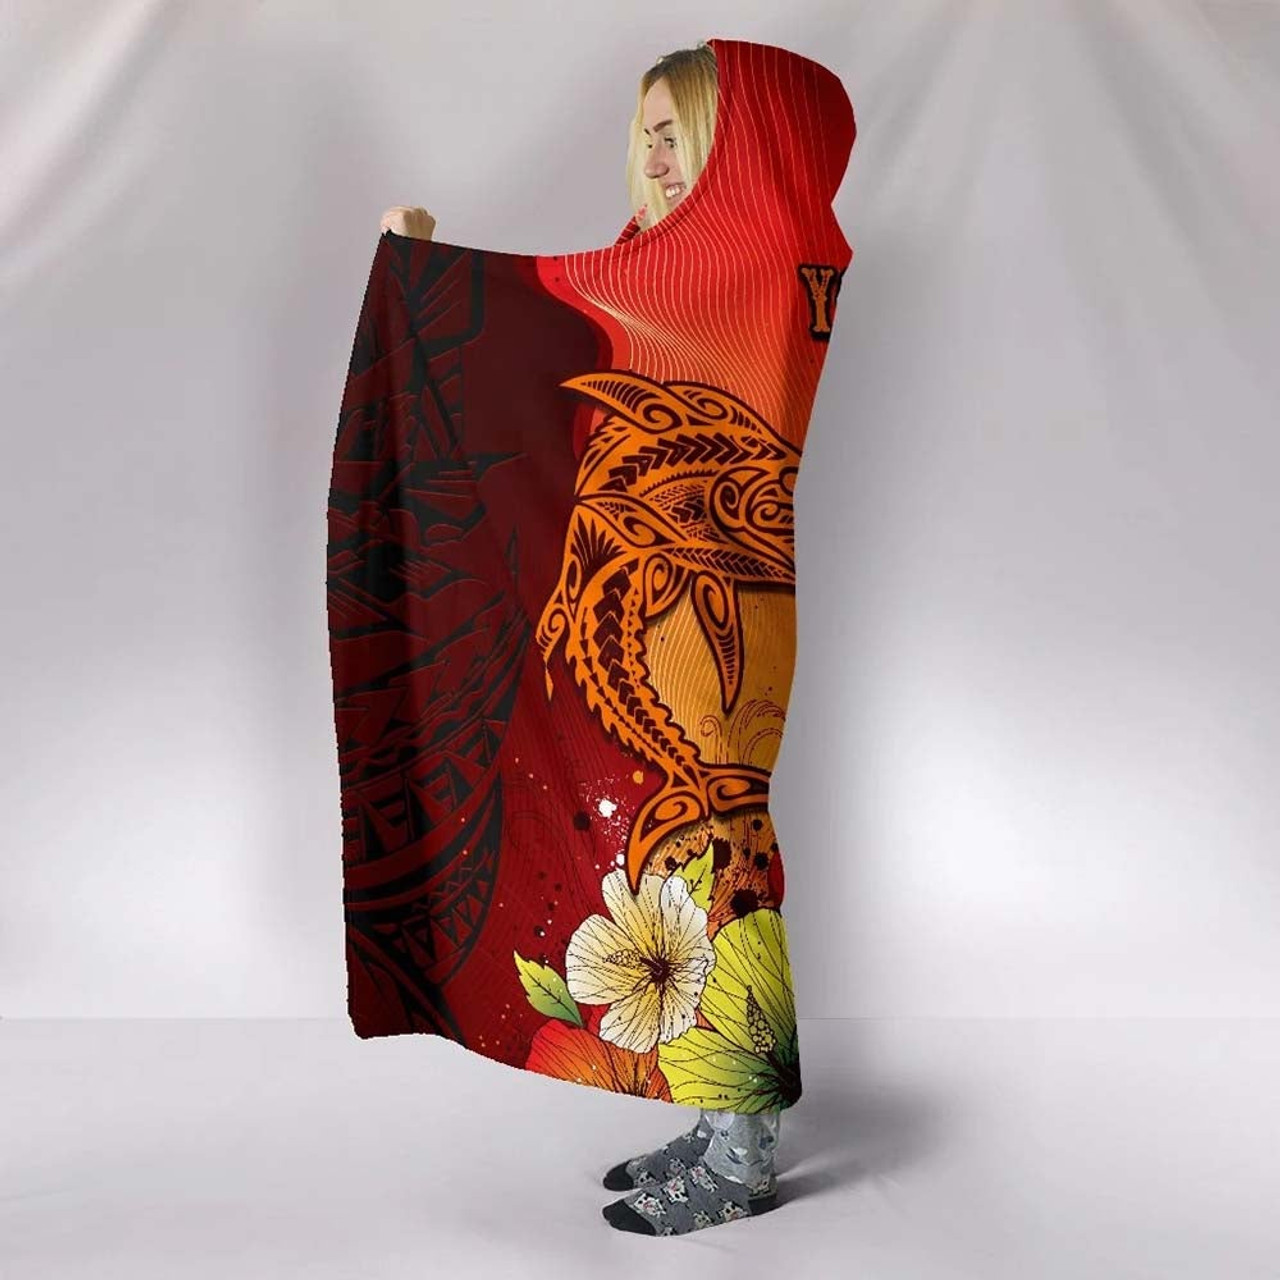 Fiji Custom Personalised Hooded Blankets - Tribal Tuna Fish 2